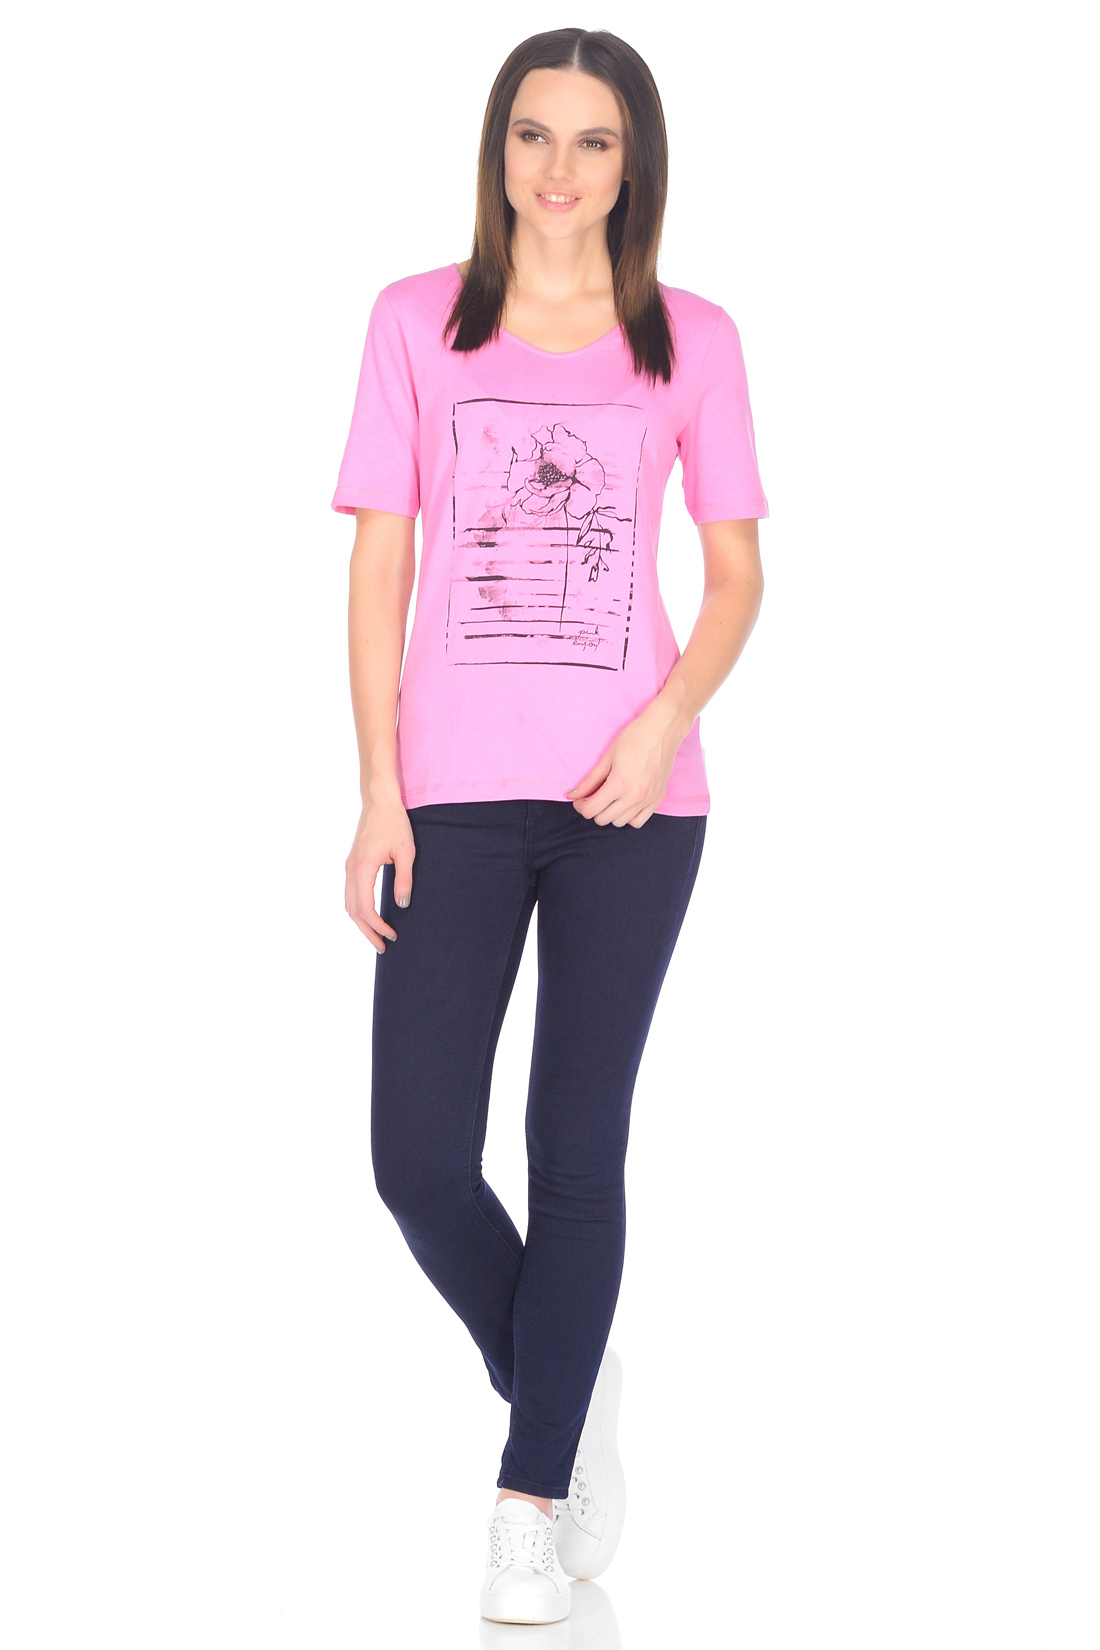 Розовая футболка с принтом (арт. baon B238069), размер S, цвет розовый Розовая футболка с принтом (арт. baon B238069) - фото 3